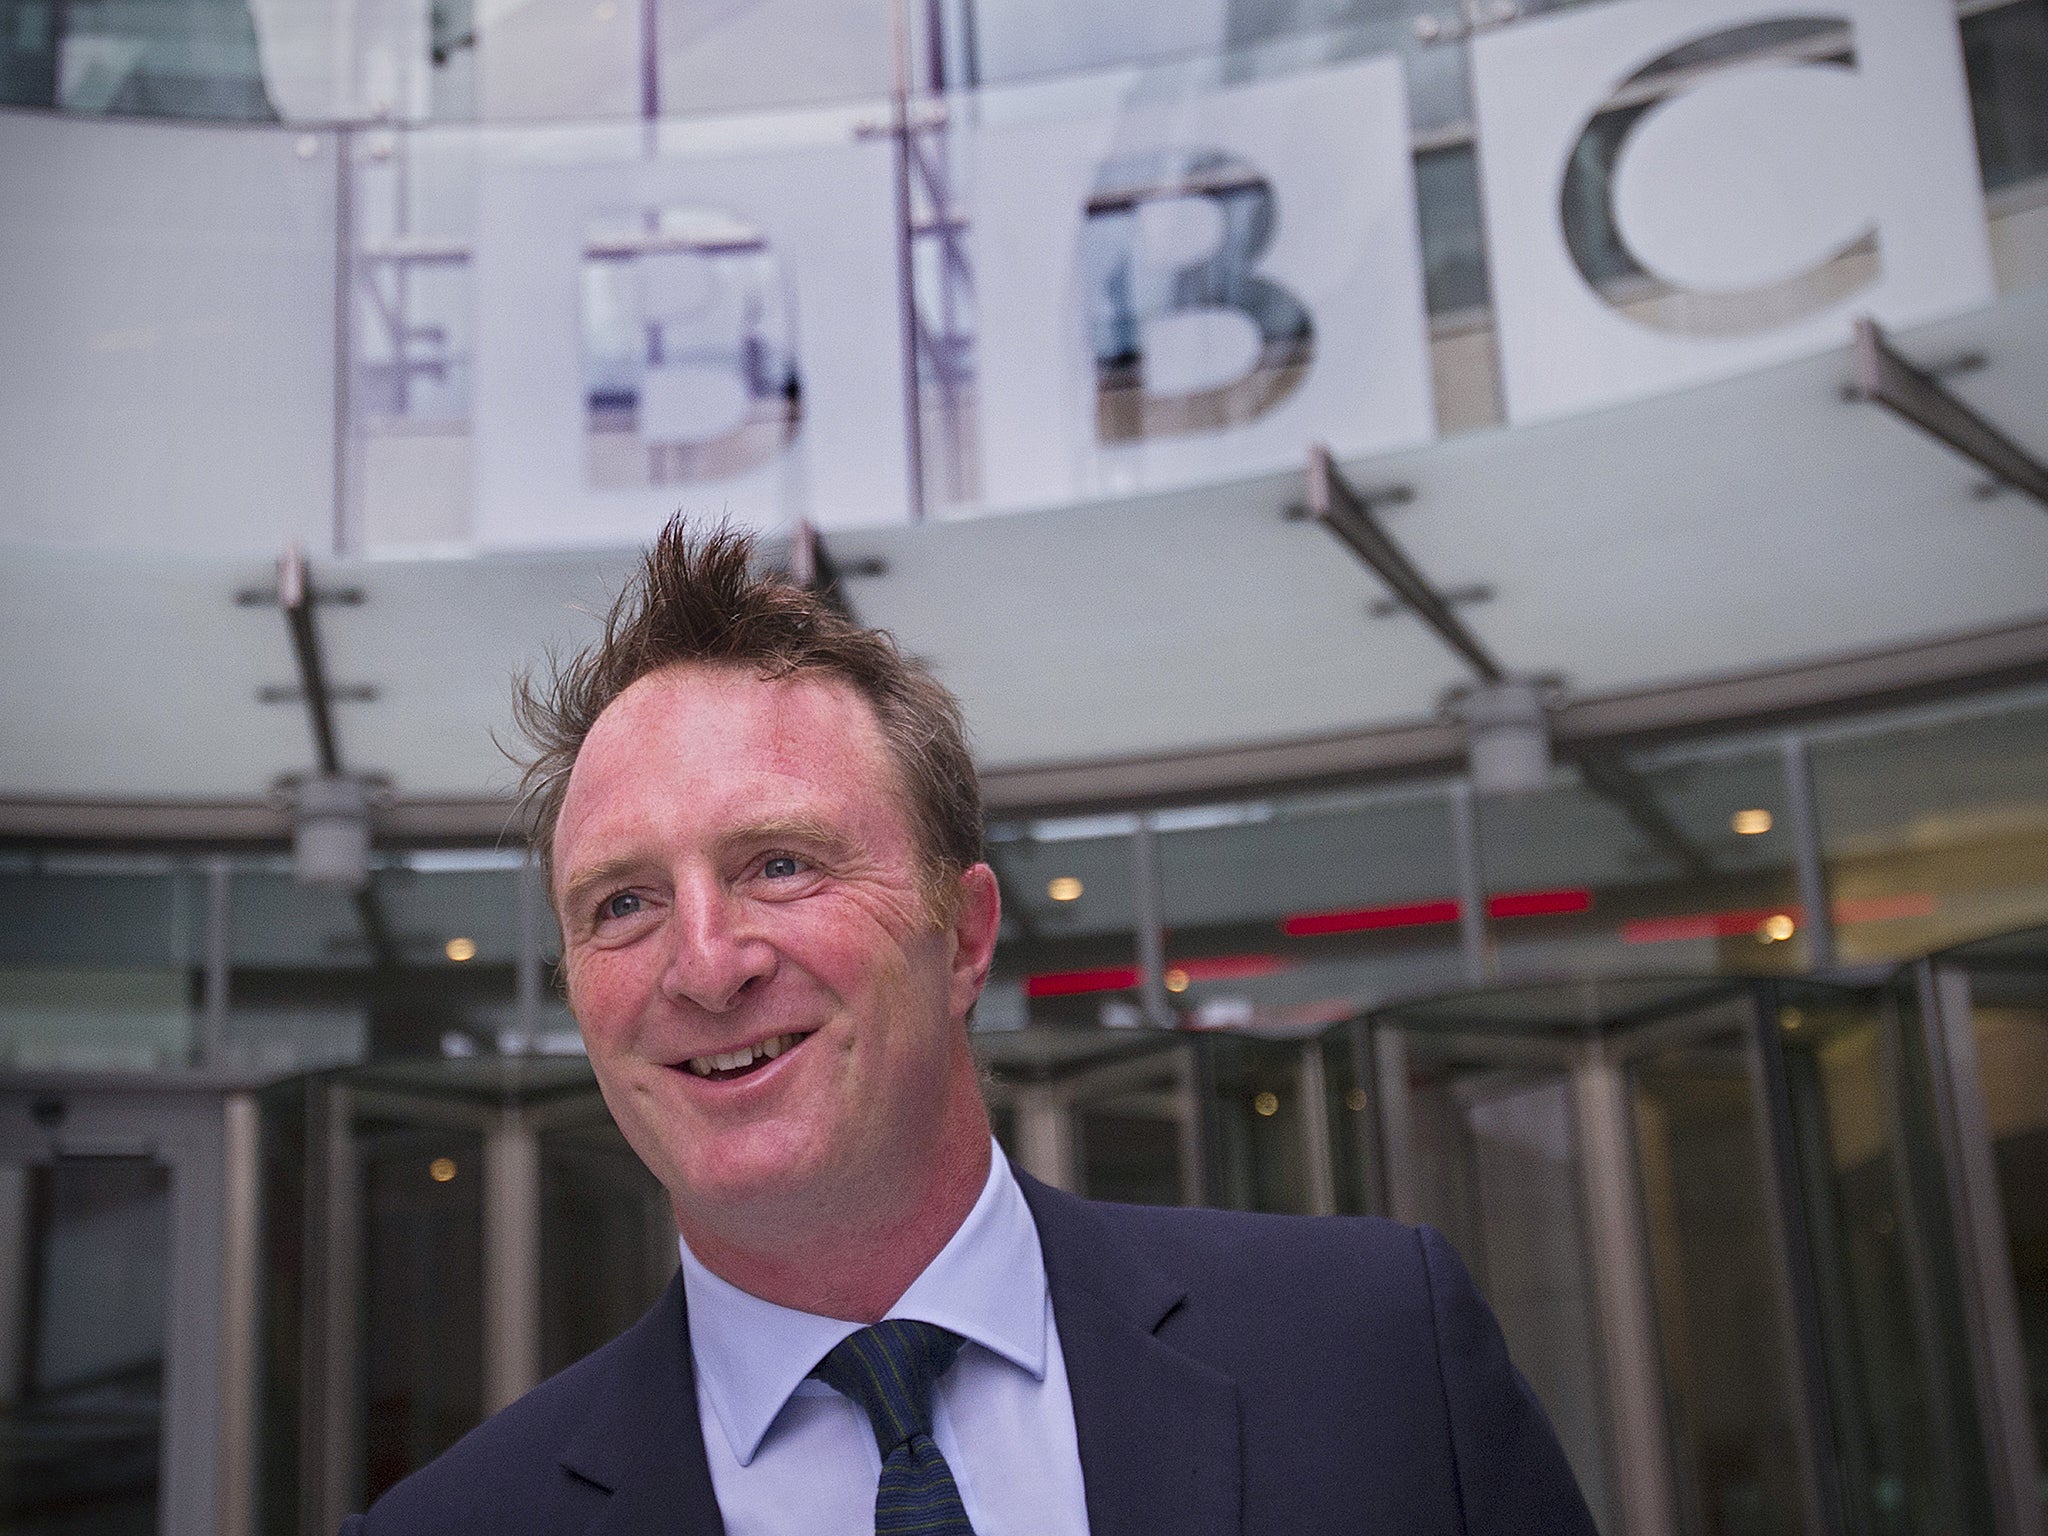 James Harding, BBC Director of News